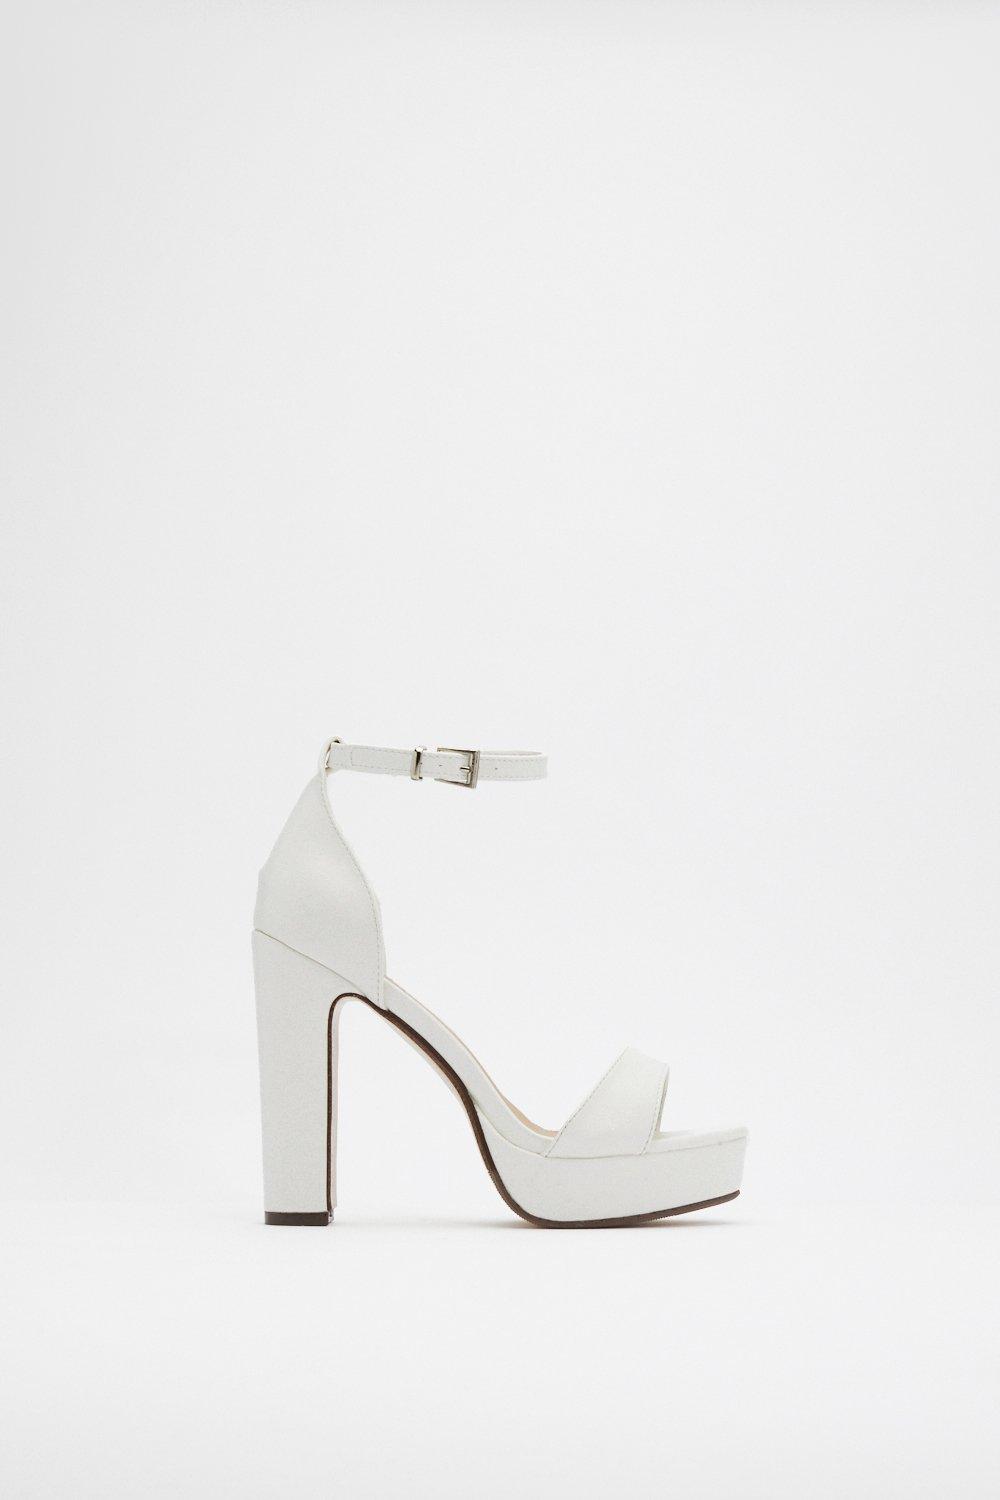 nasty gal white heels